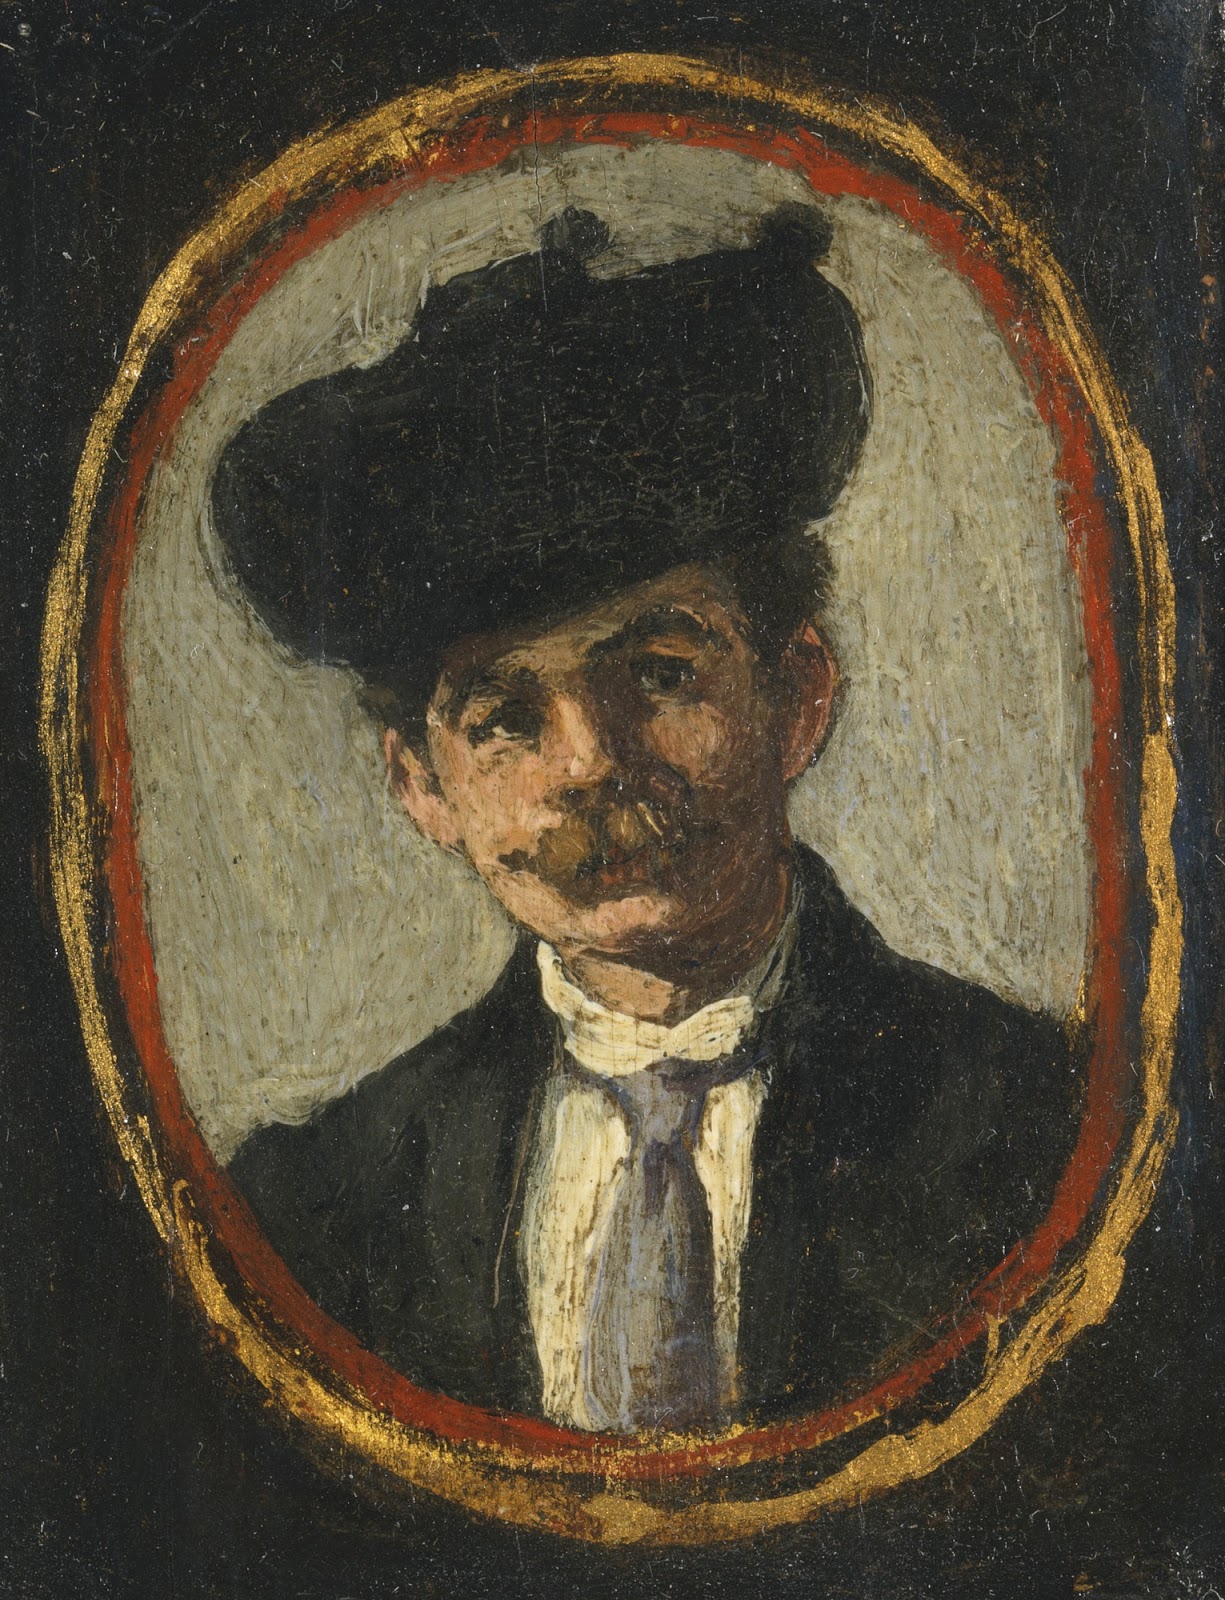 Edouard+Manet-1832-1883 (122).jpg